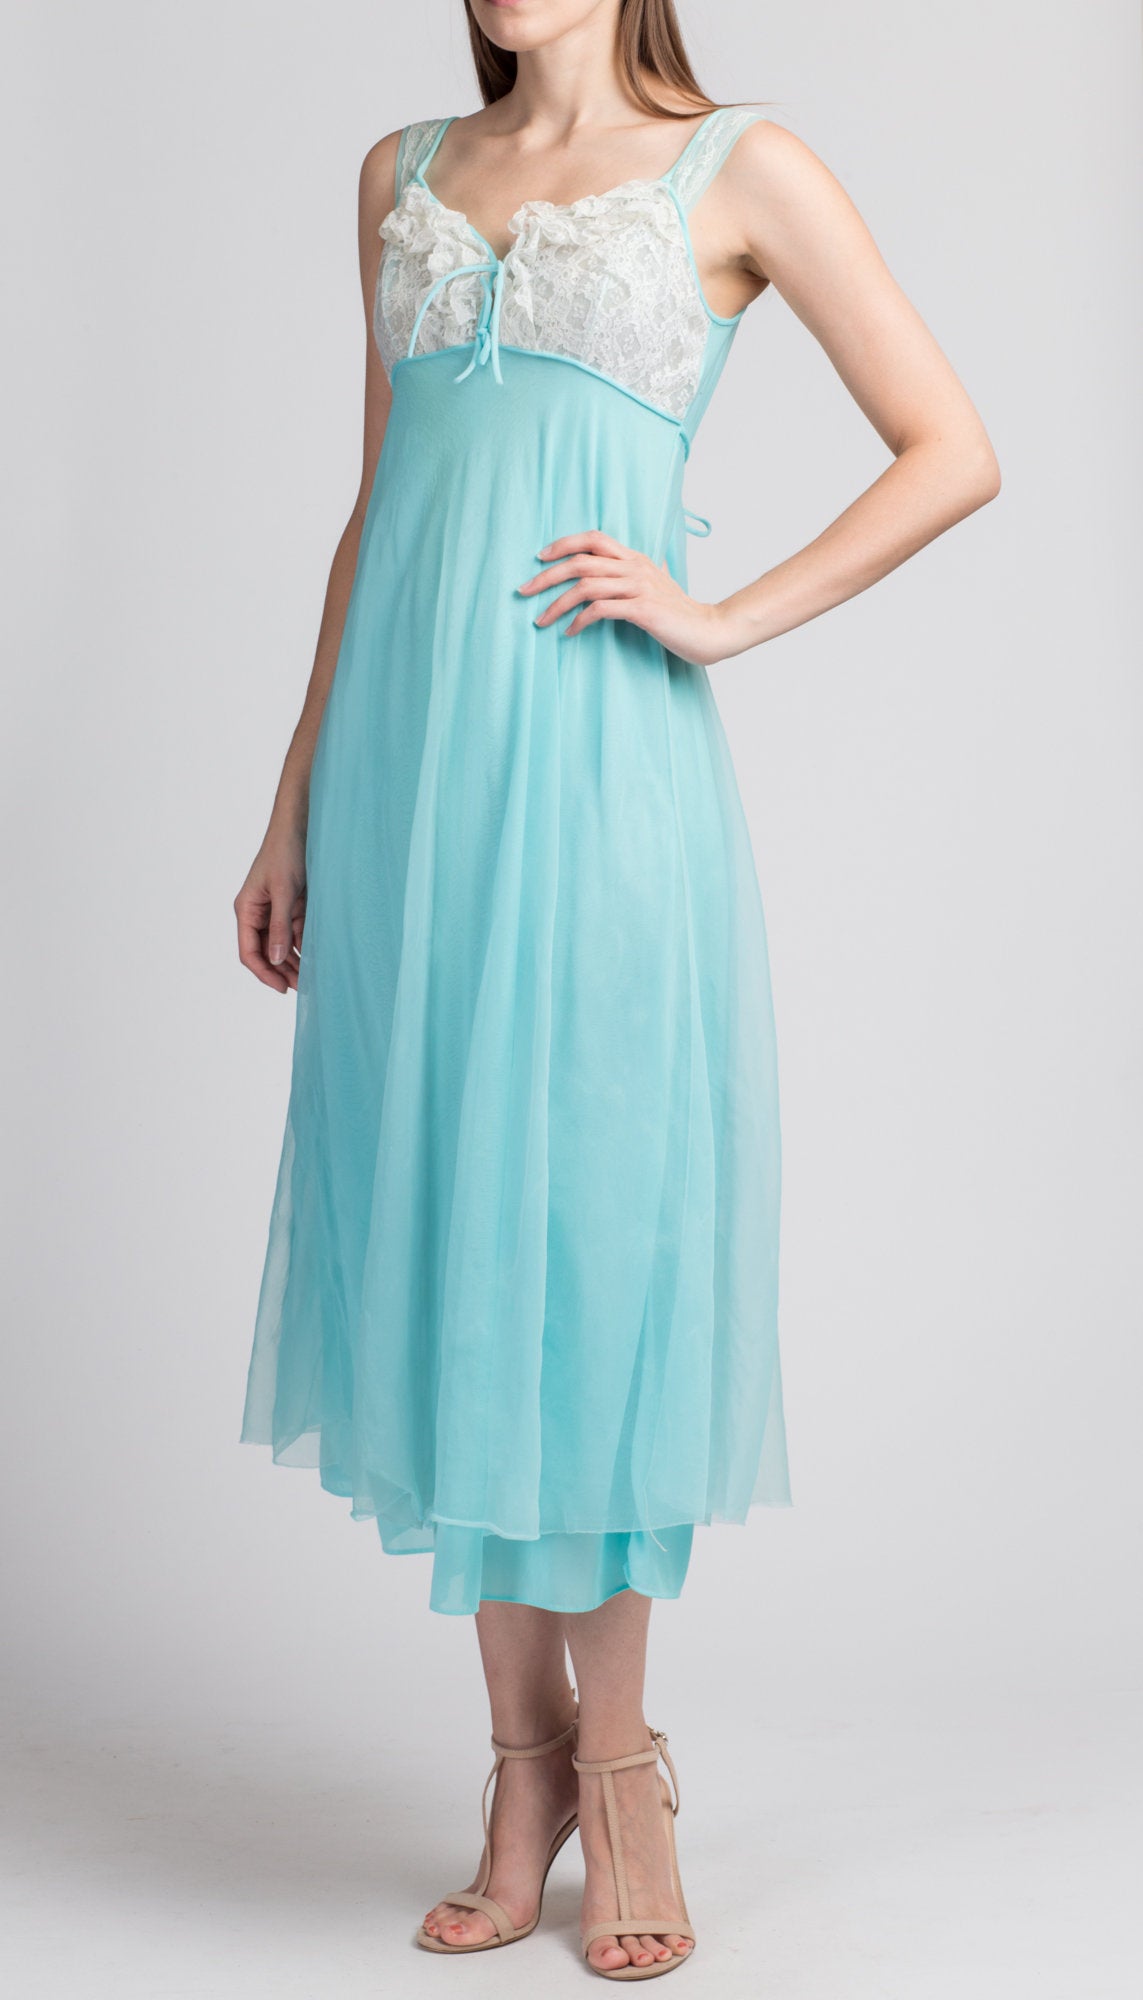 70s Blue Peignoir Nightgown - Small to Medium